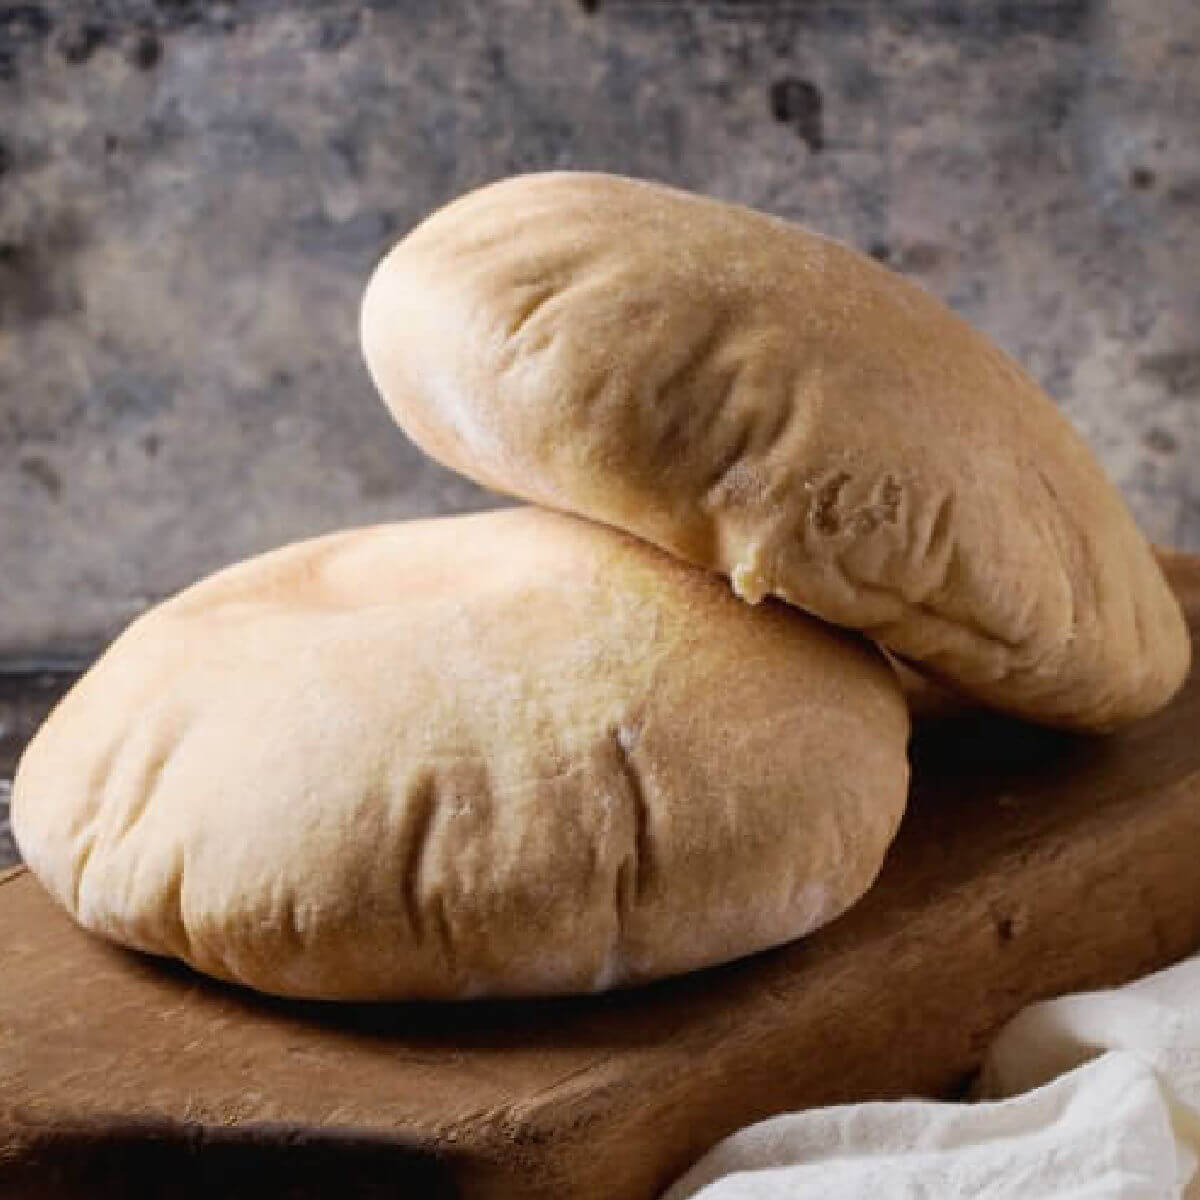 Pita Pocket Bread Recipe - Frugal Family Home